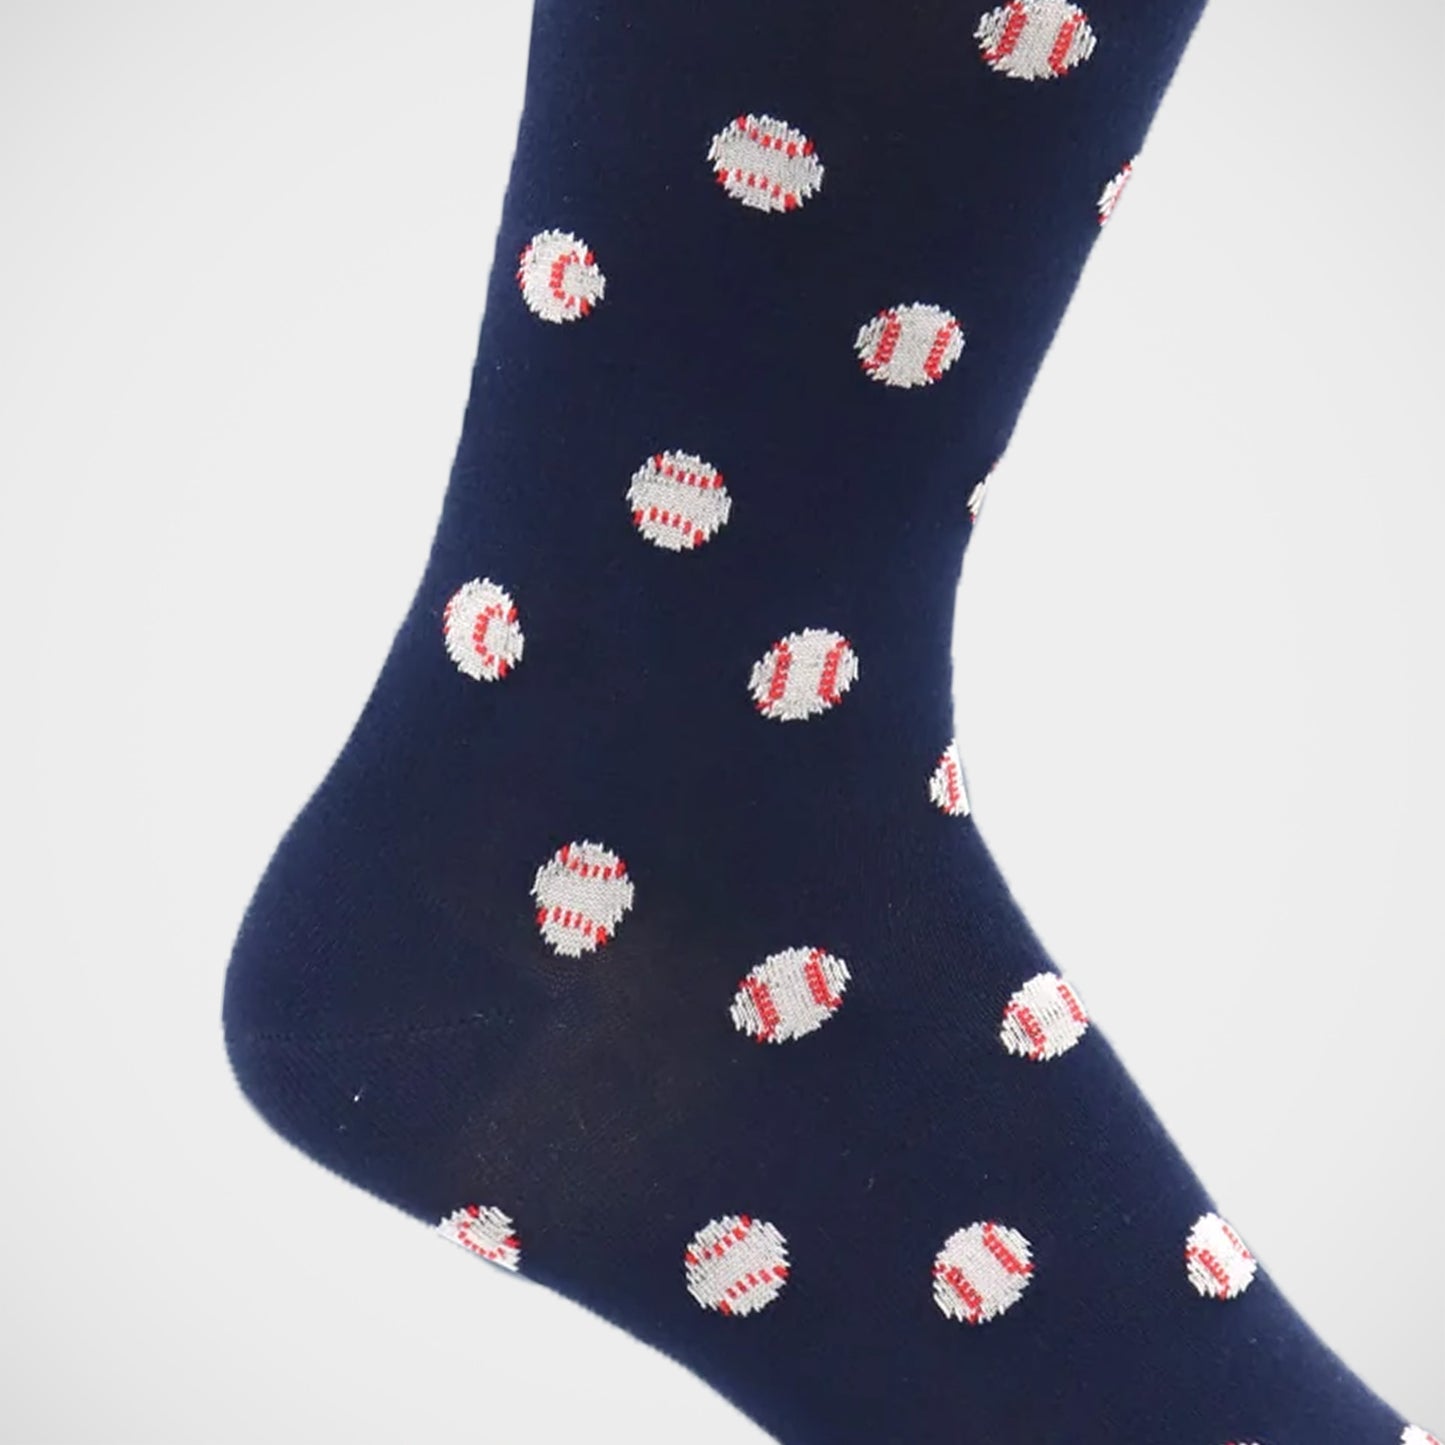 'Baseball' Socks